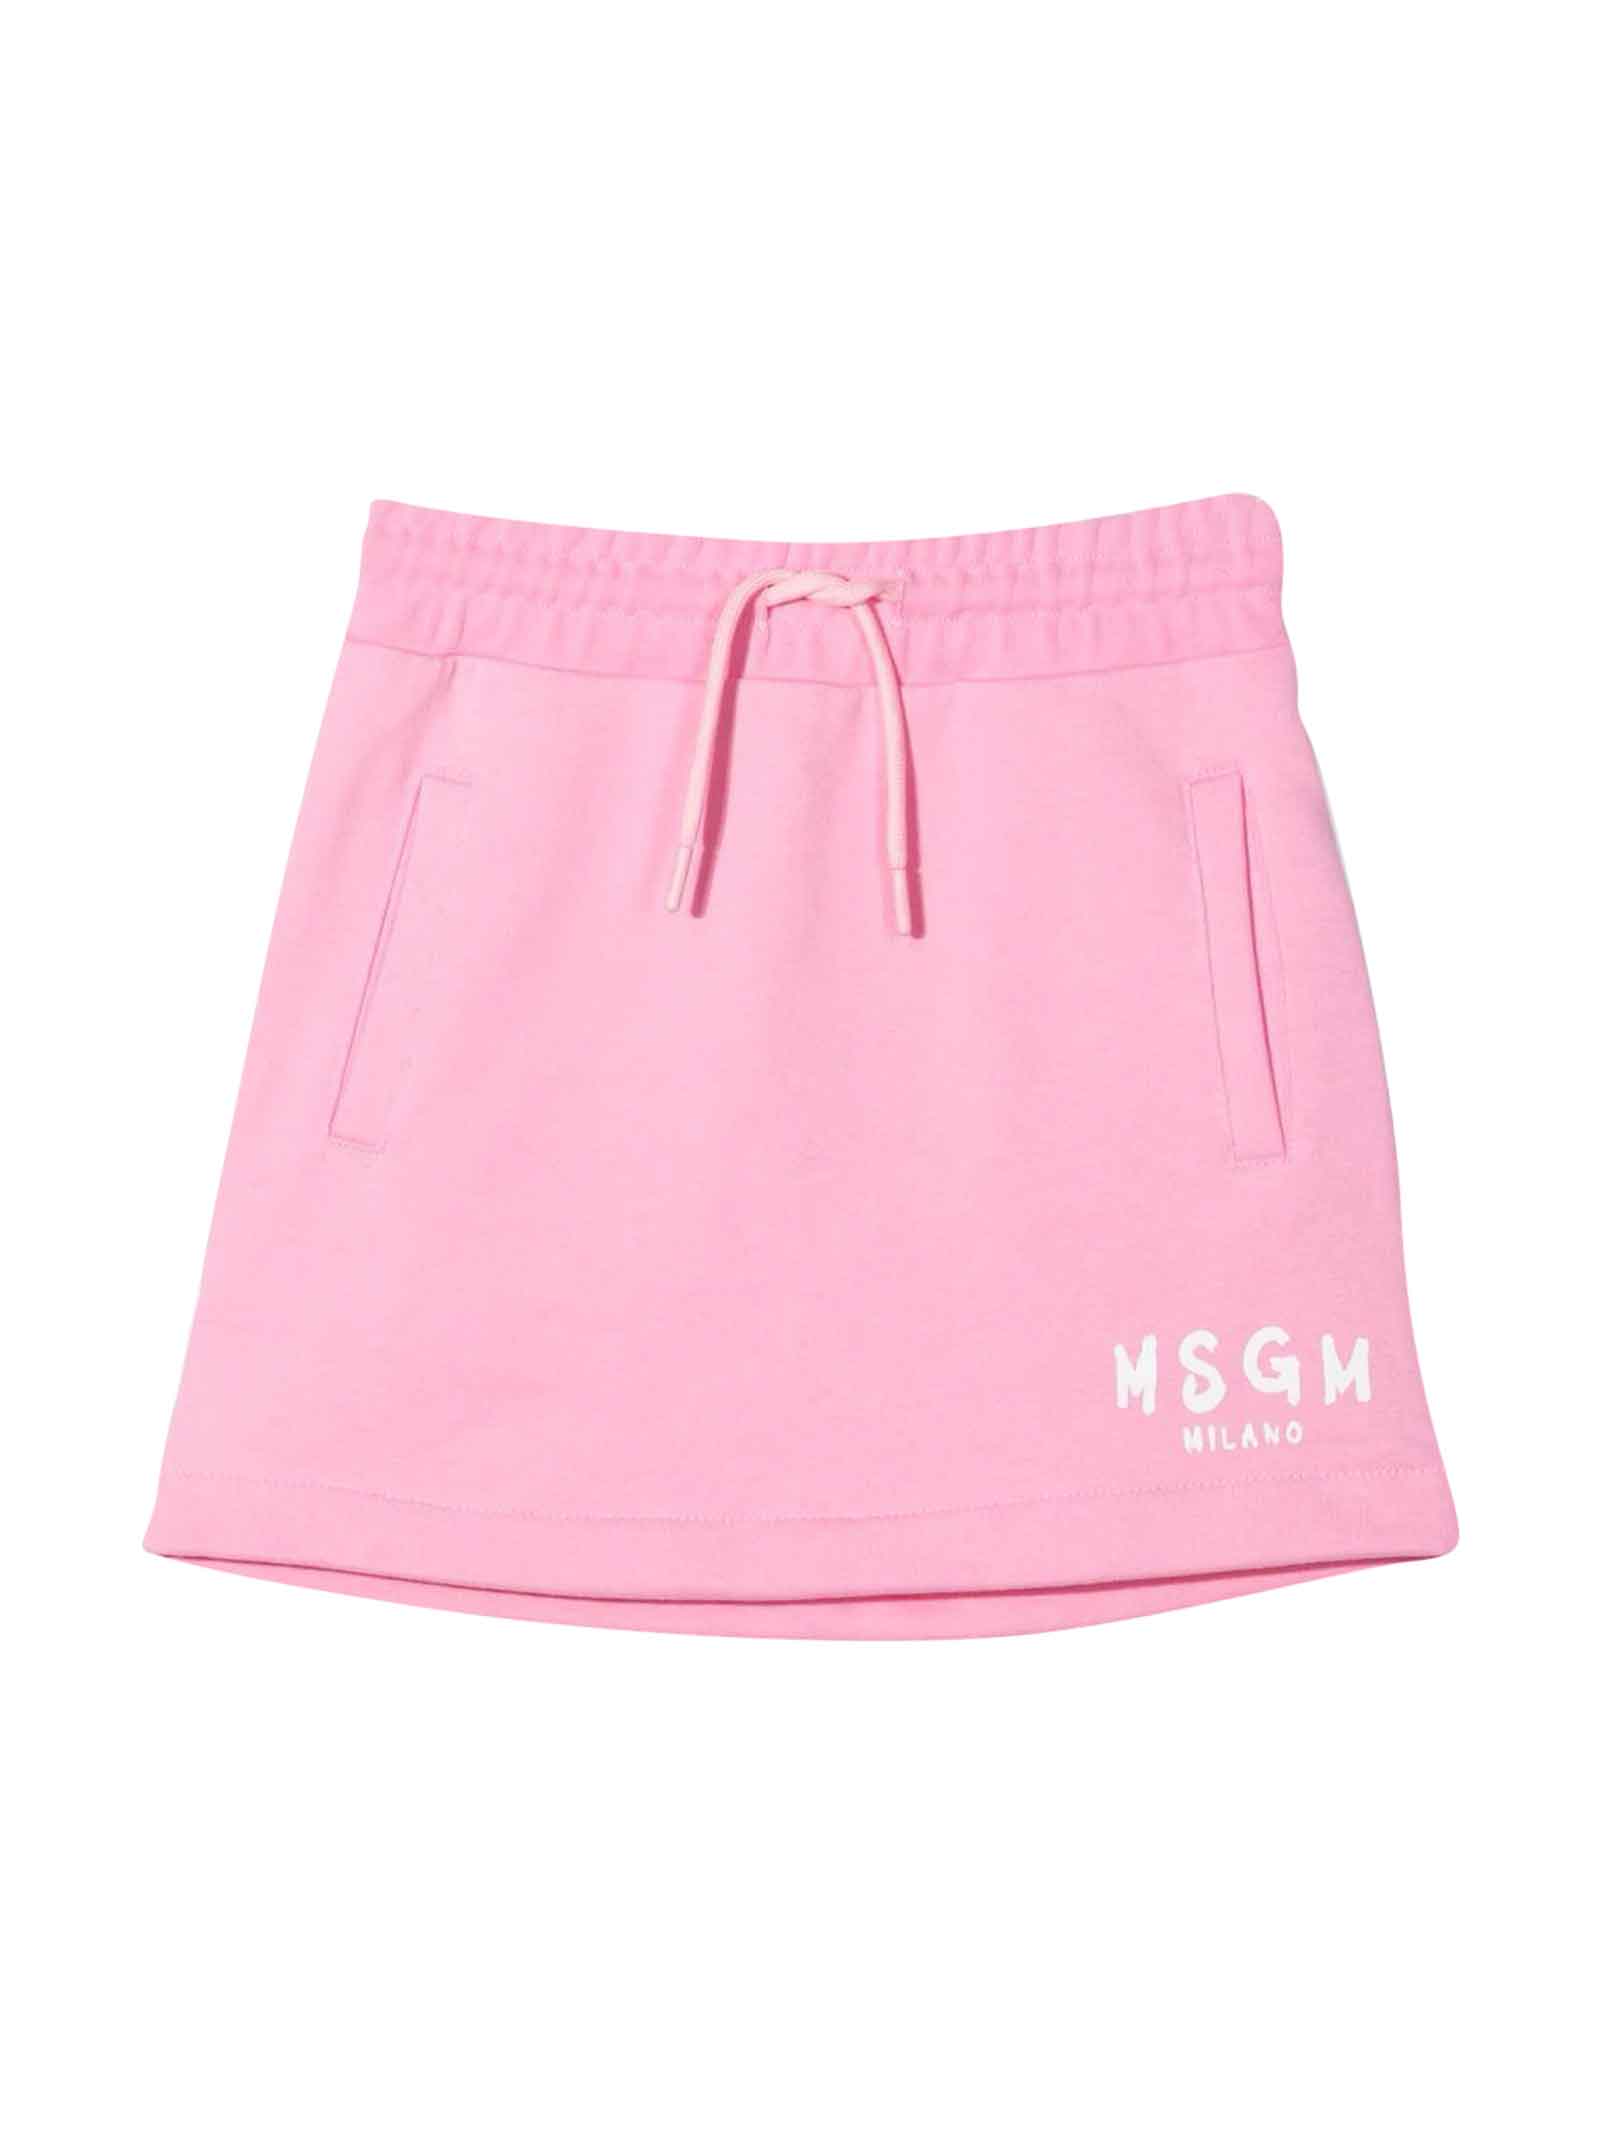 MSGM Pink Skirt Teen